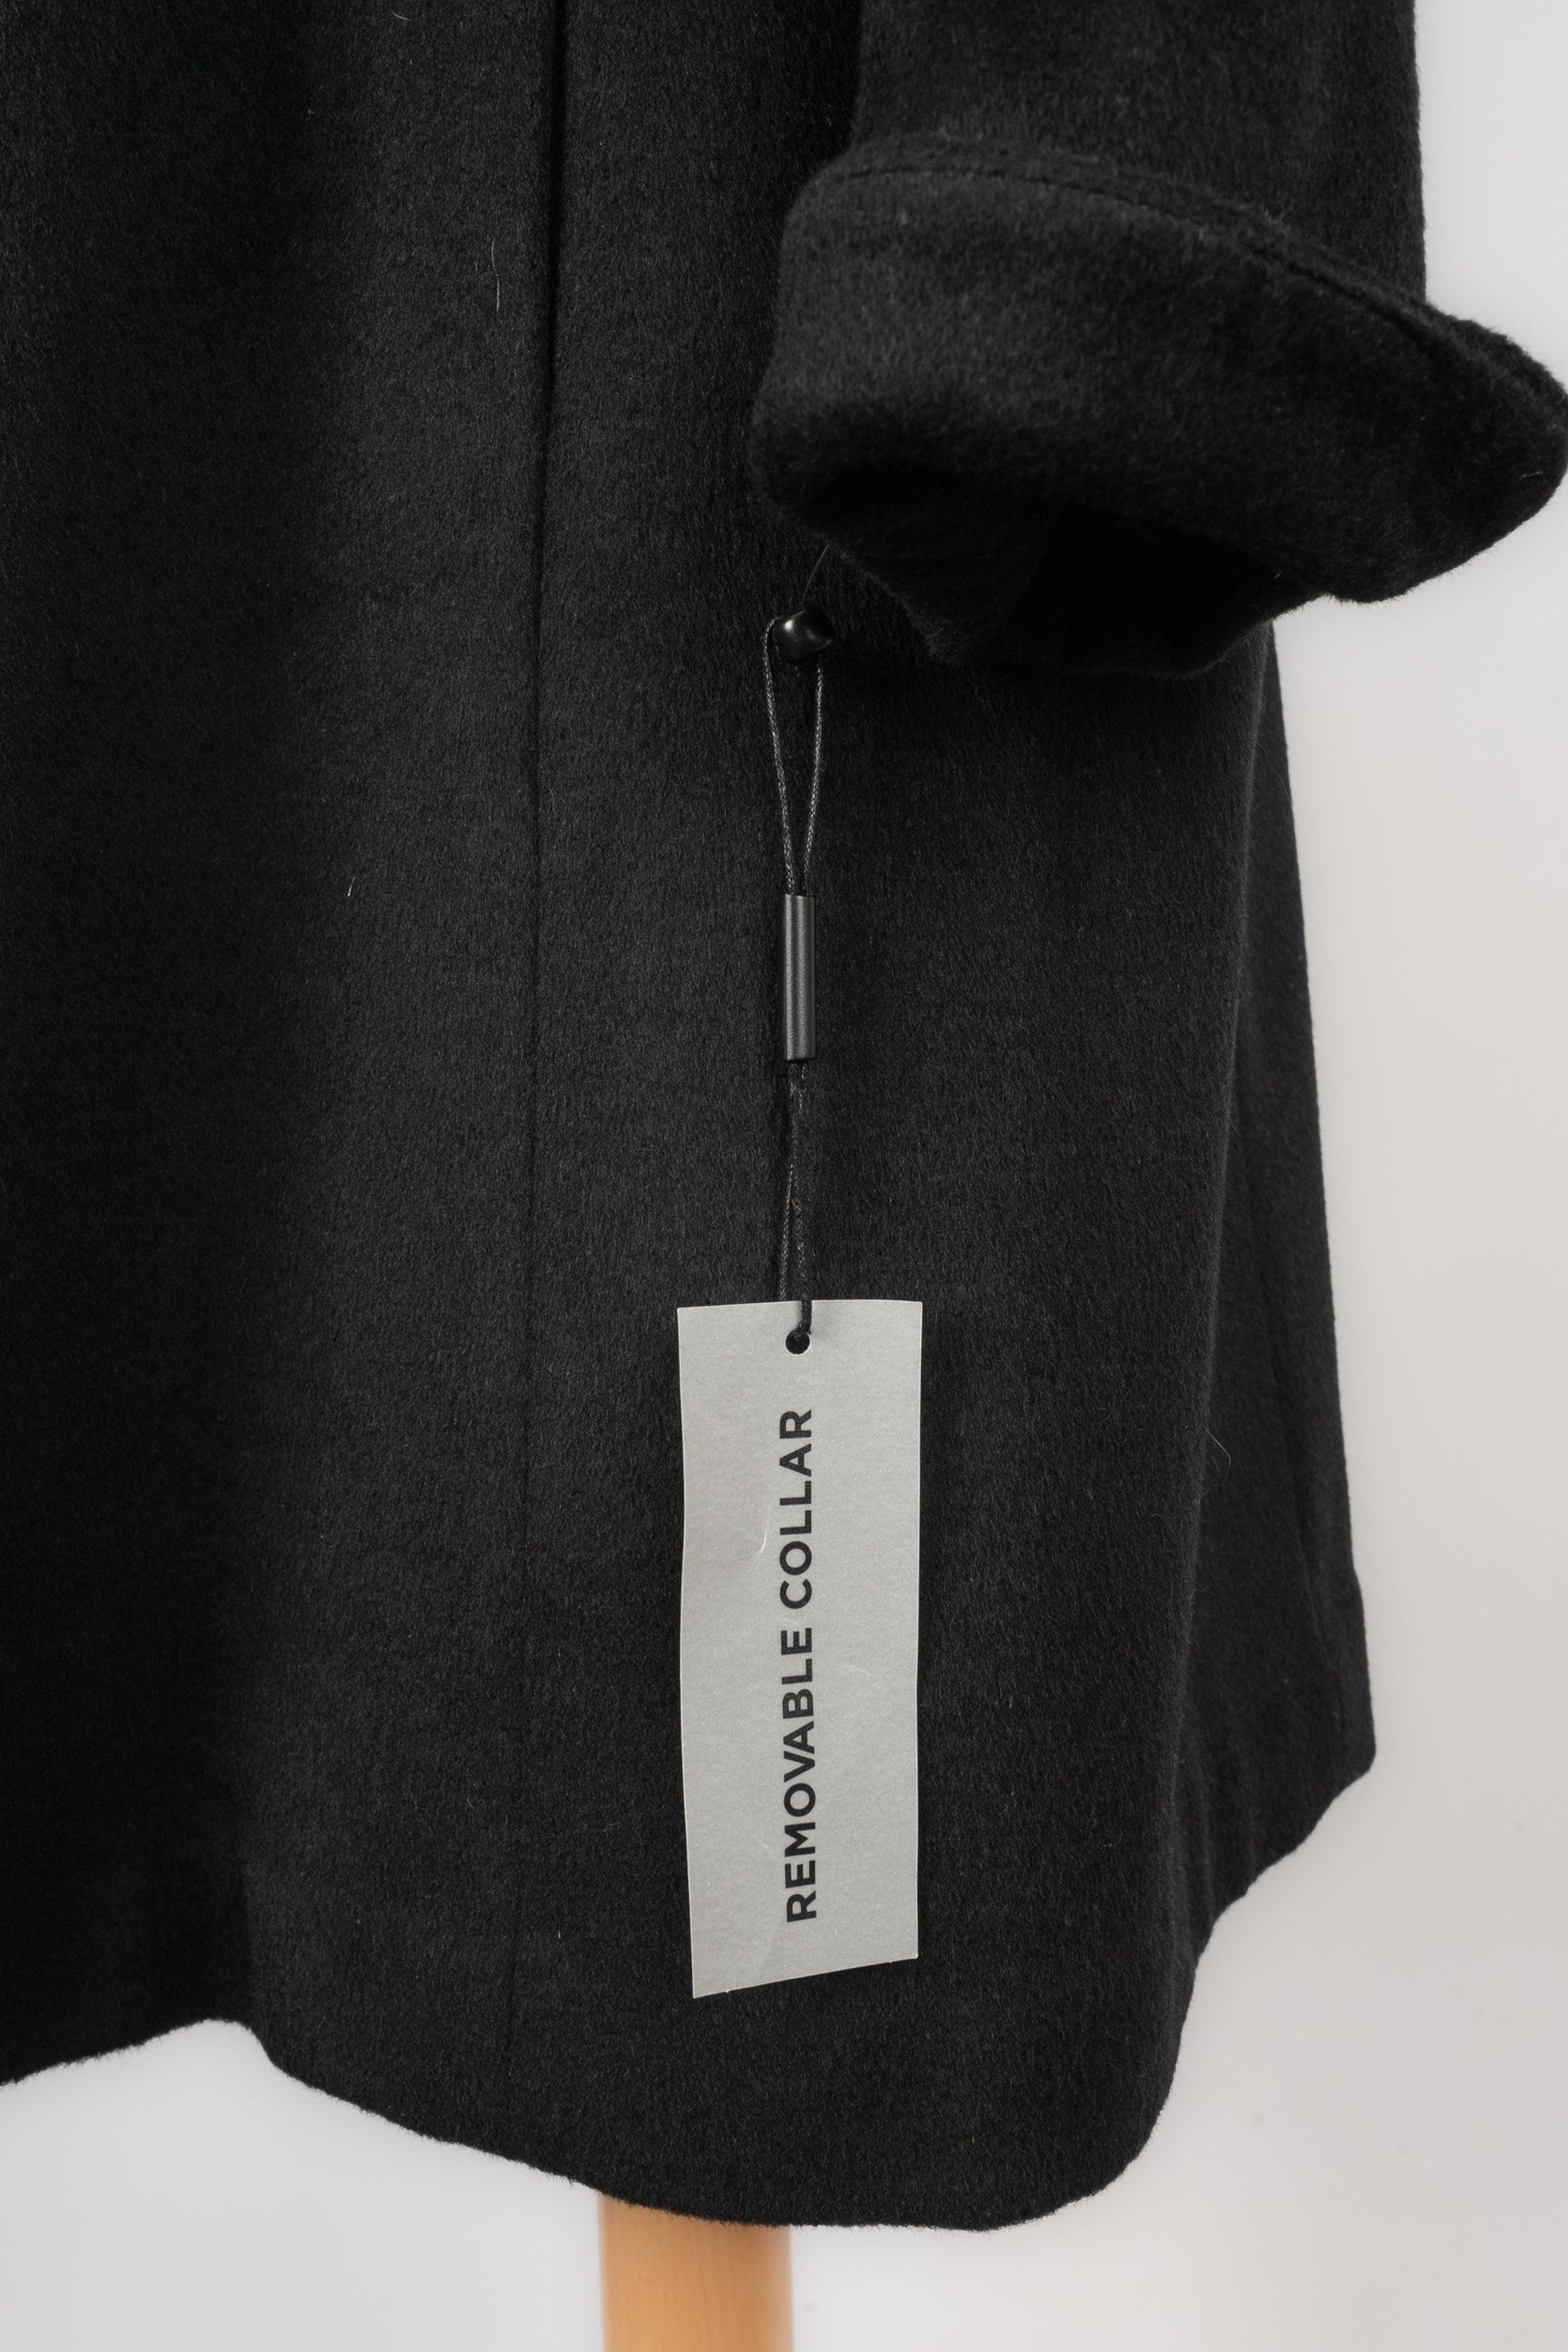 Karl Lagerfeld Black Blended Wool Jacket For Sale 6